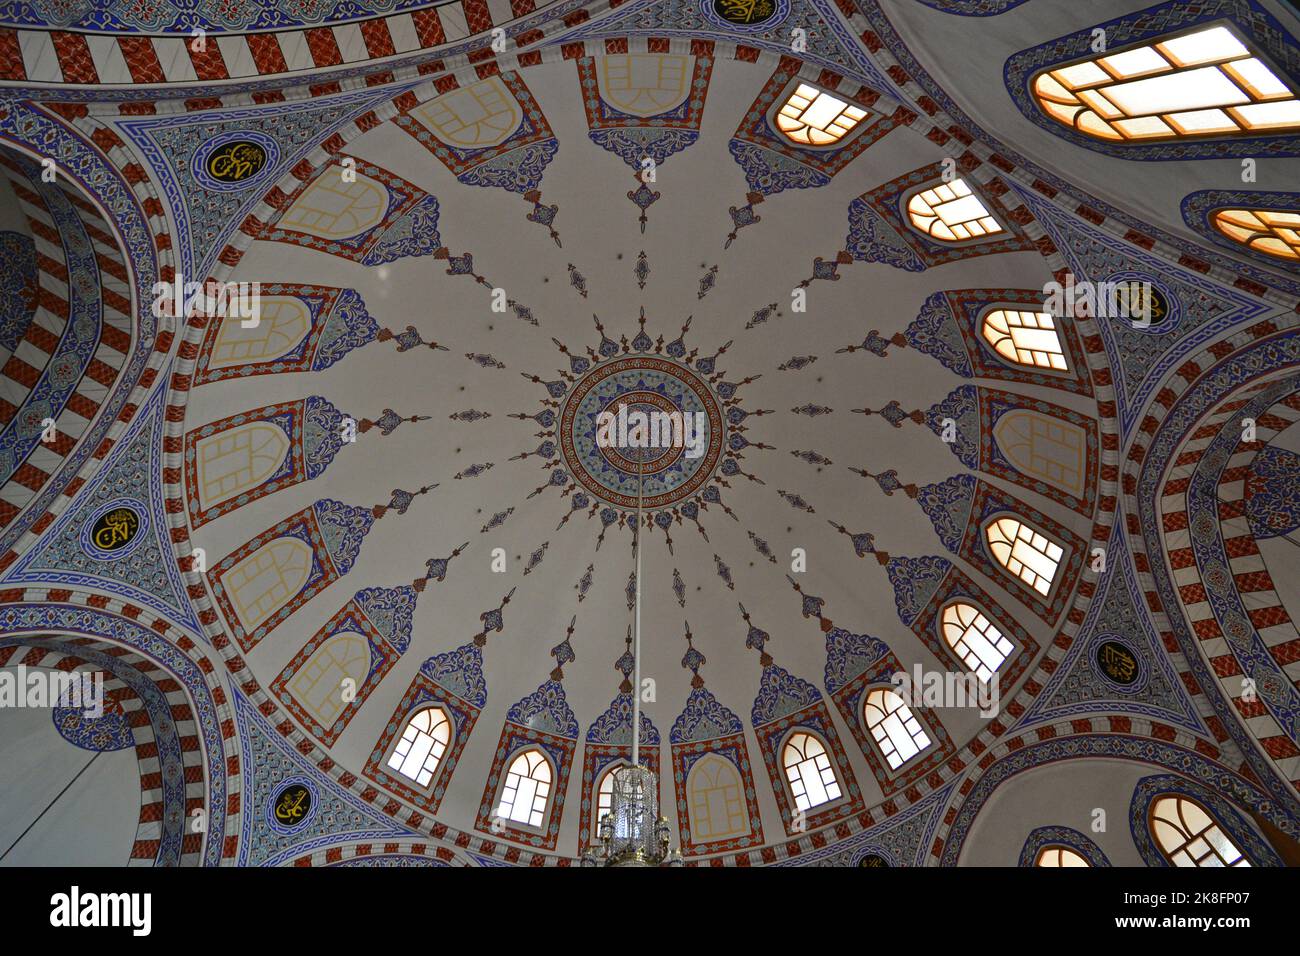 Located in Merzifon, Turkey, the Kara Mustafa Pasha Mosque was built in the 17th century. Stock Photo